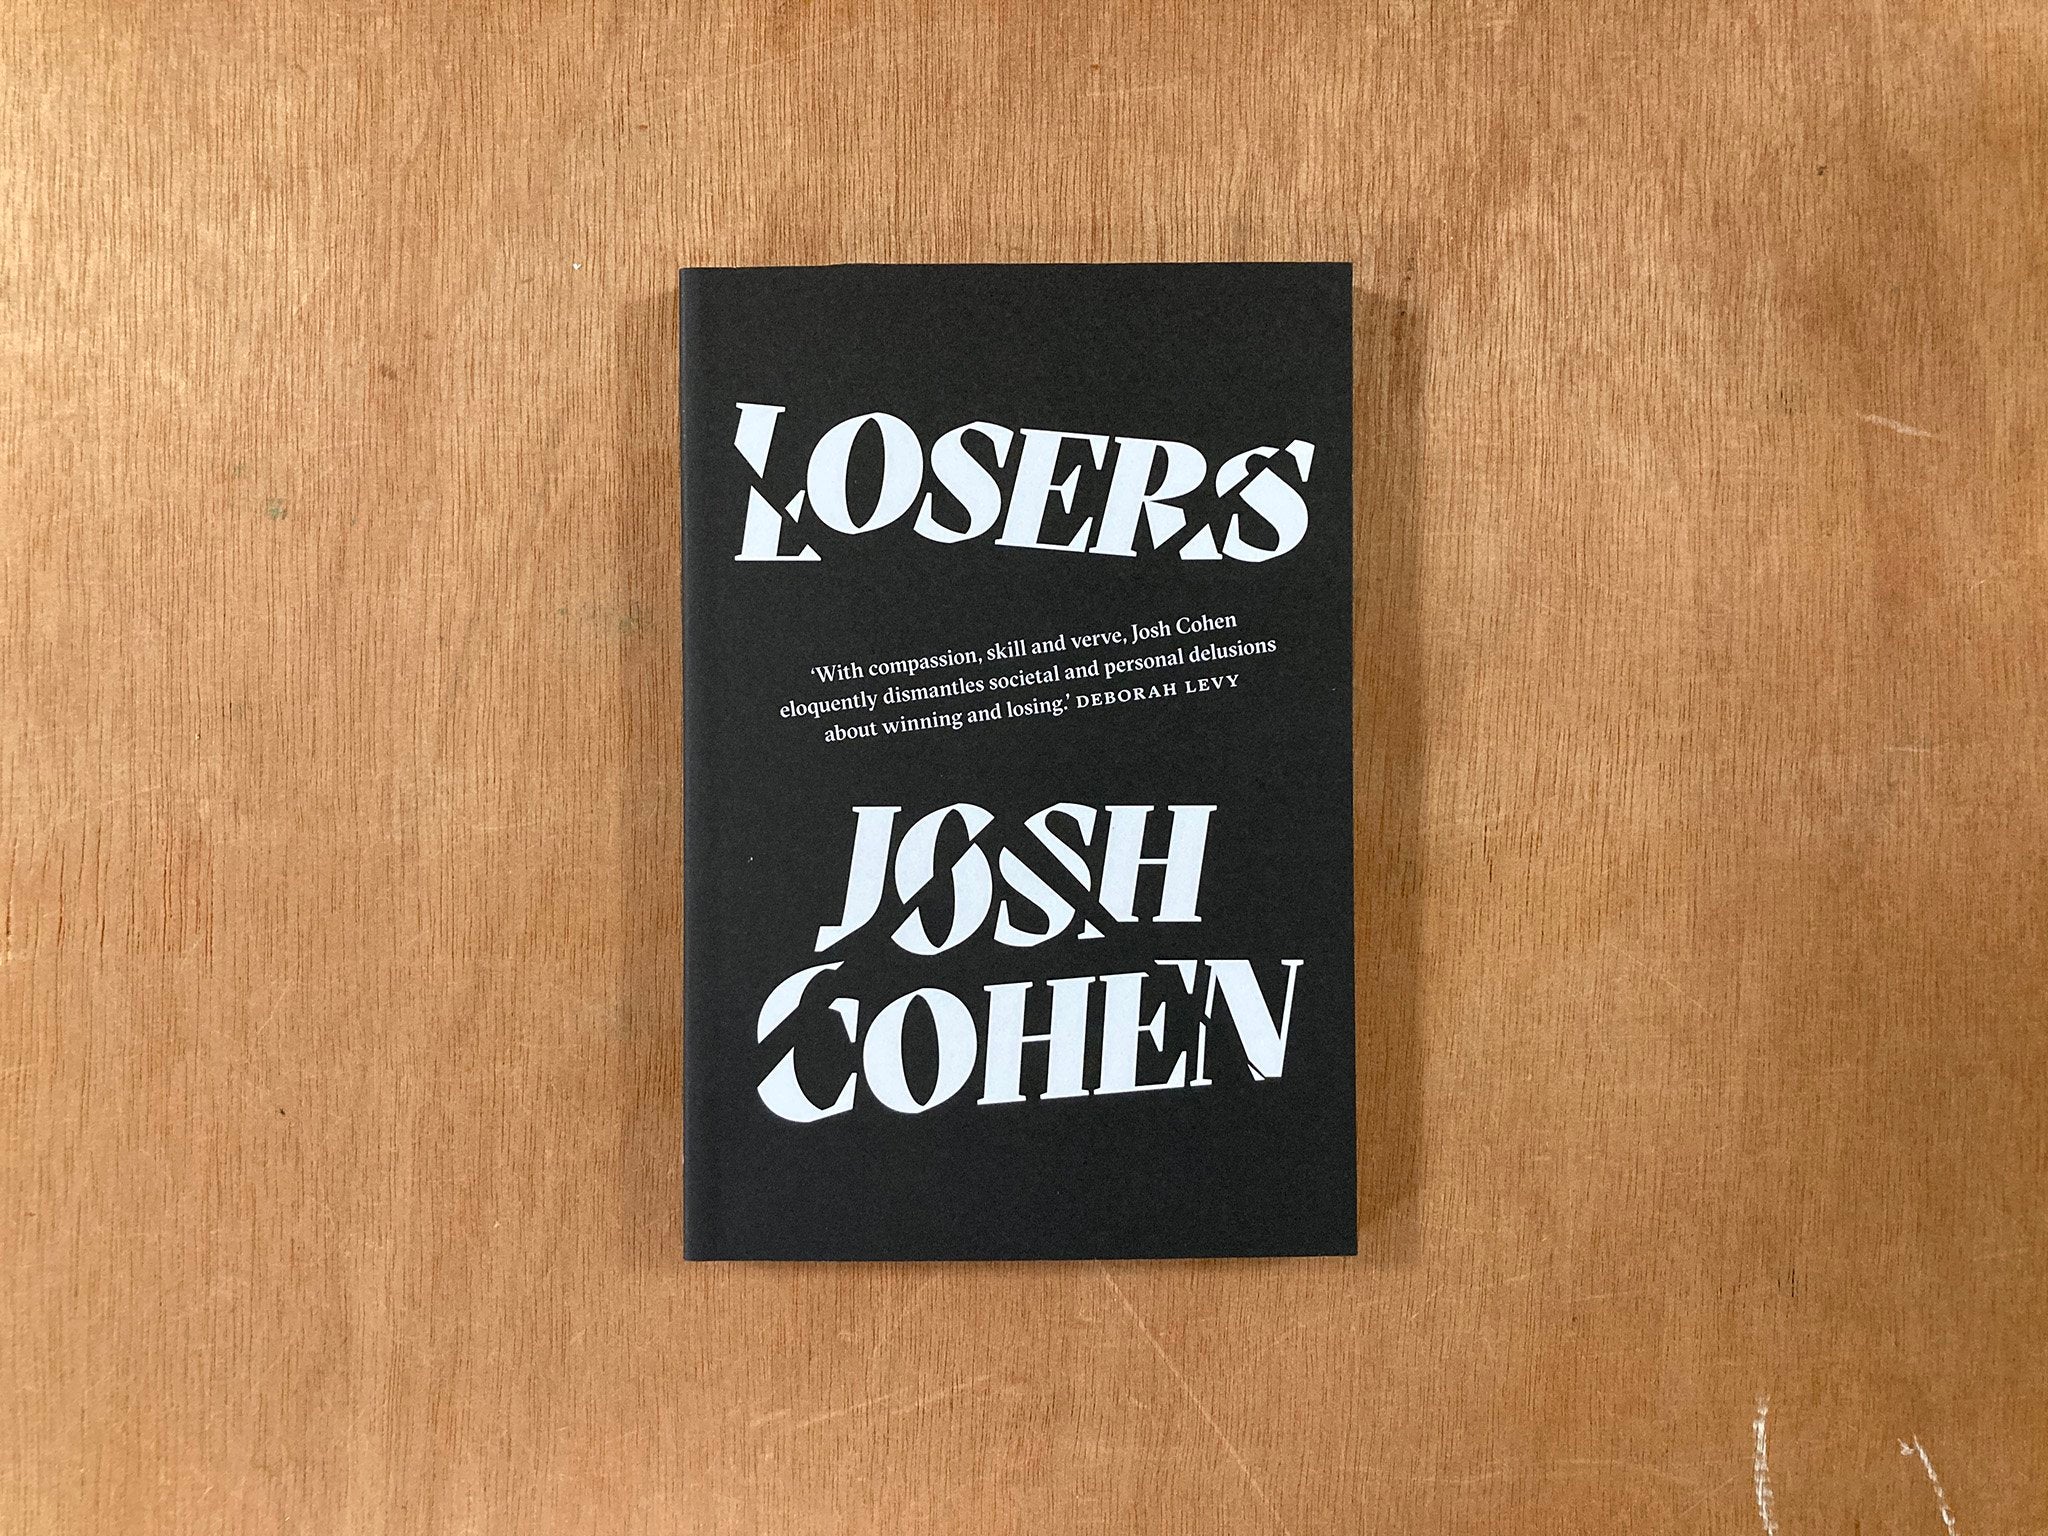 LOSERS by Josh Cohen